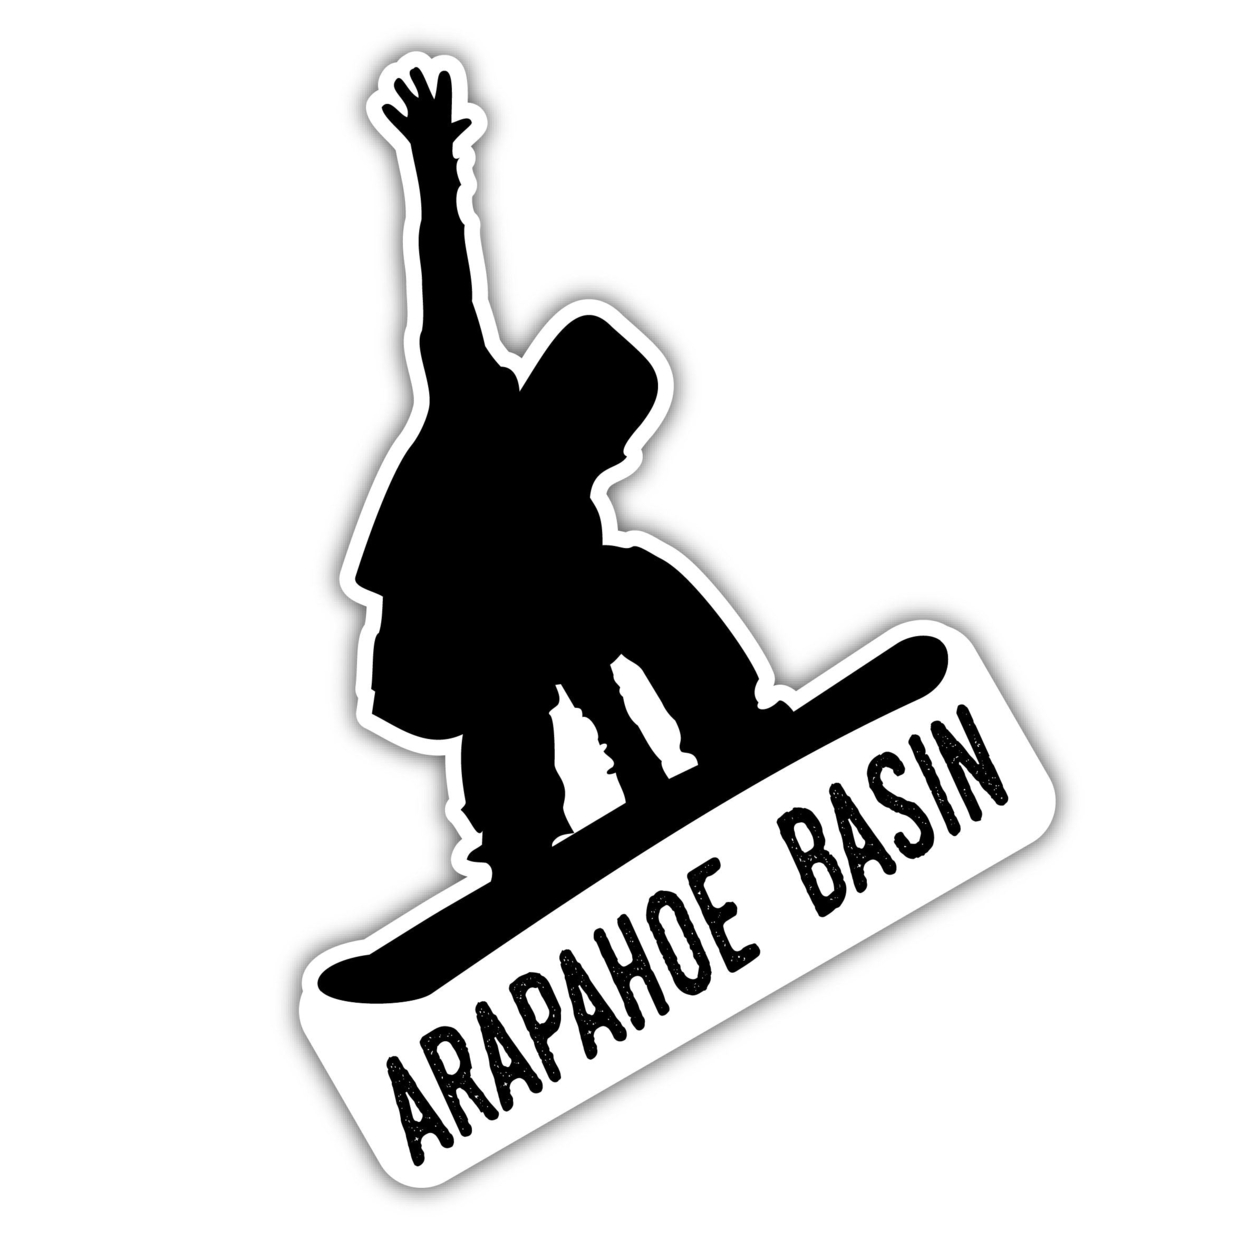 Arapahoe Basin Colorado Ski Adventures Souvenir Approximately 5 X 2.5-Inch Vinyl Decal Sticker Goggle Design